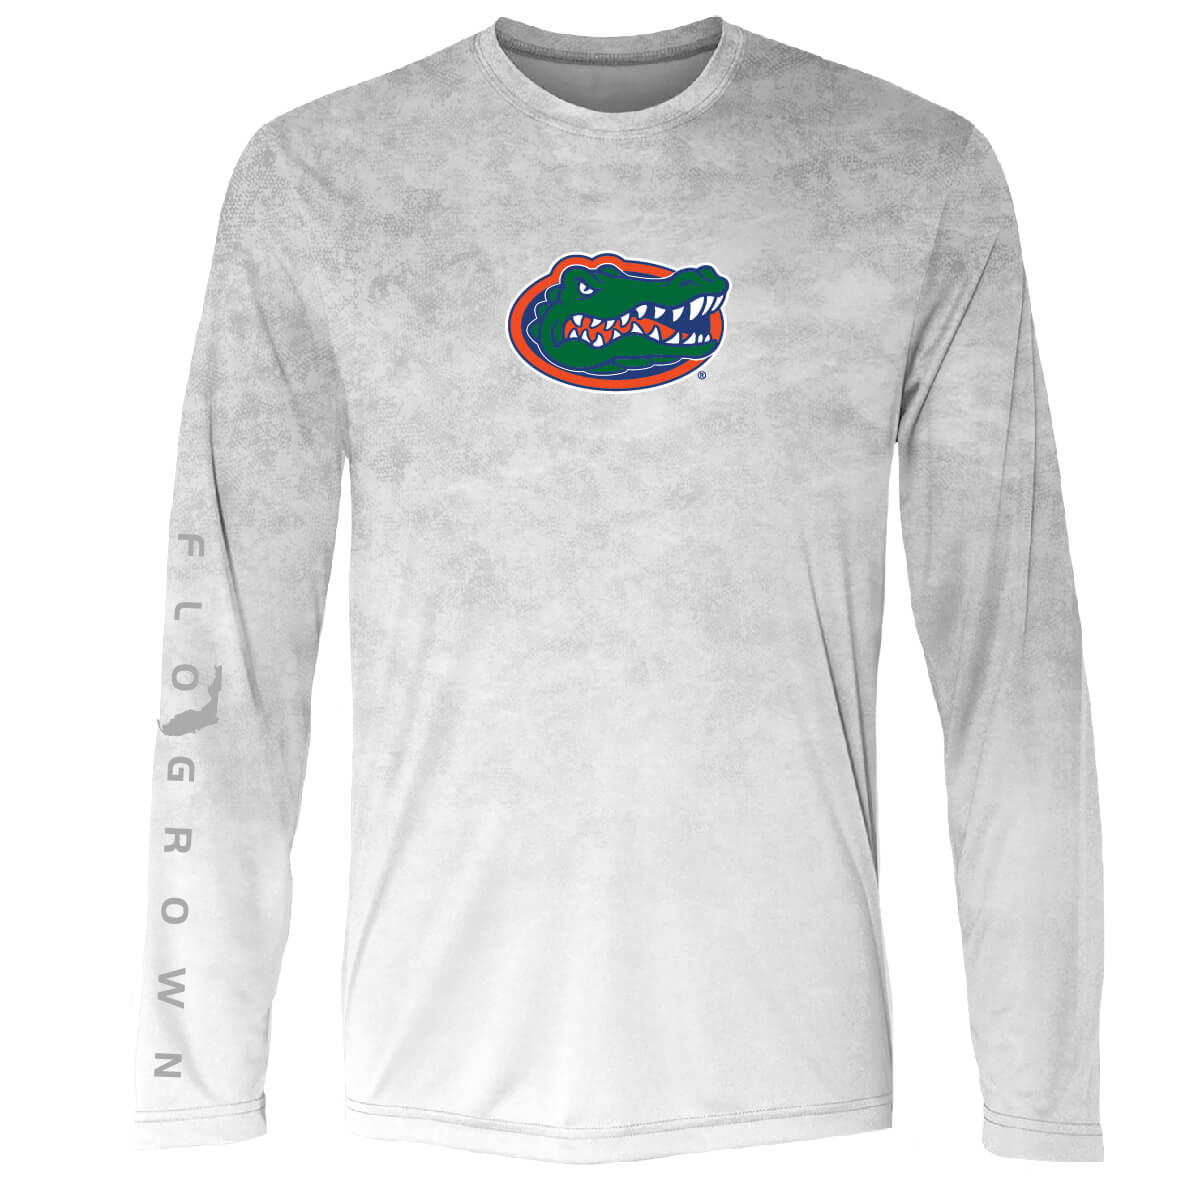 FloGrown Mens Florida Gators Performance Long Sleeve T-Shirt - White/Grey - Small